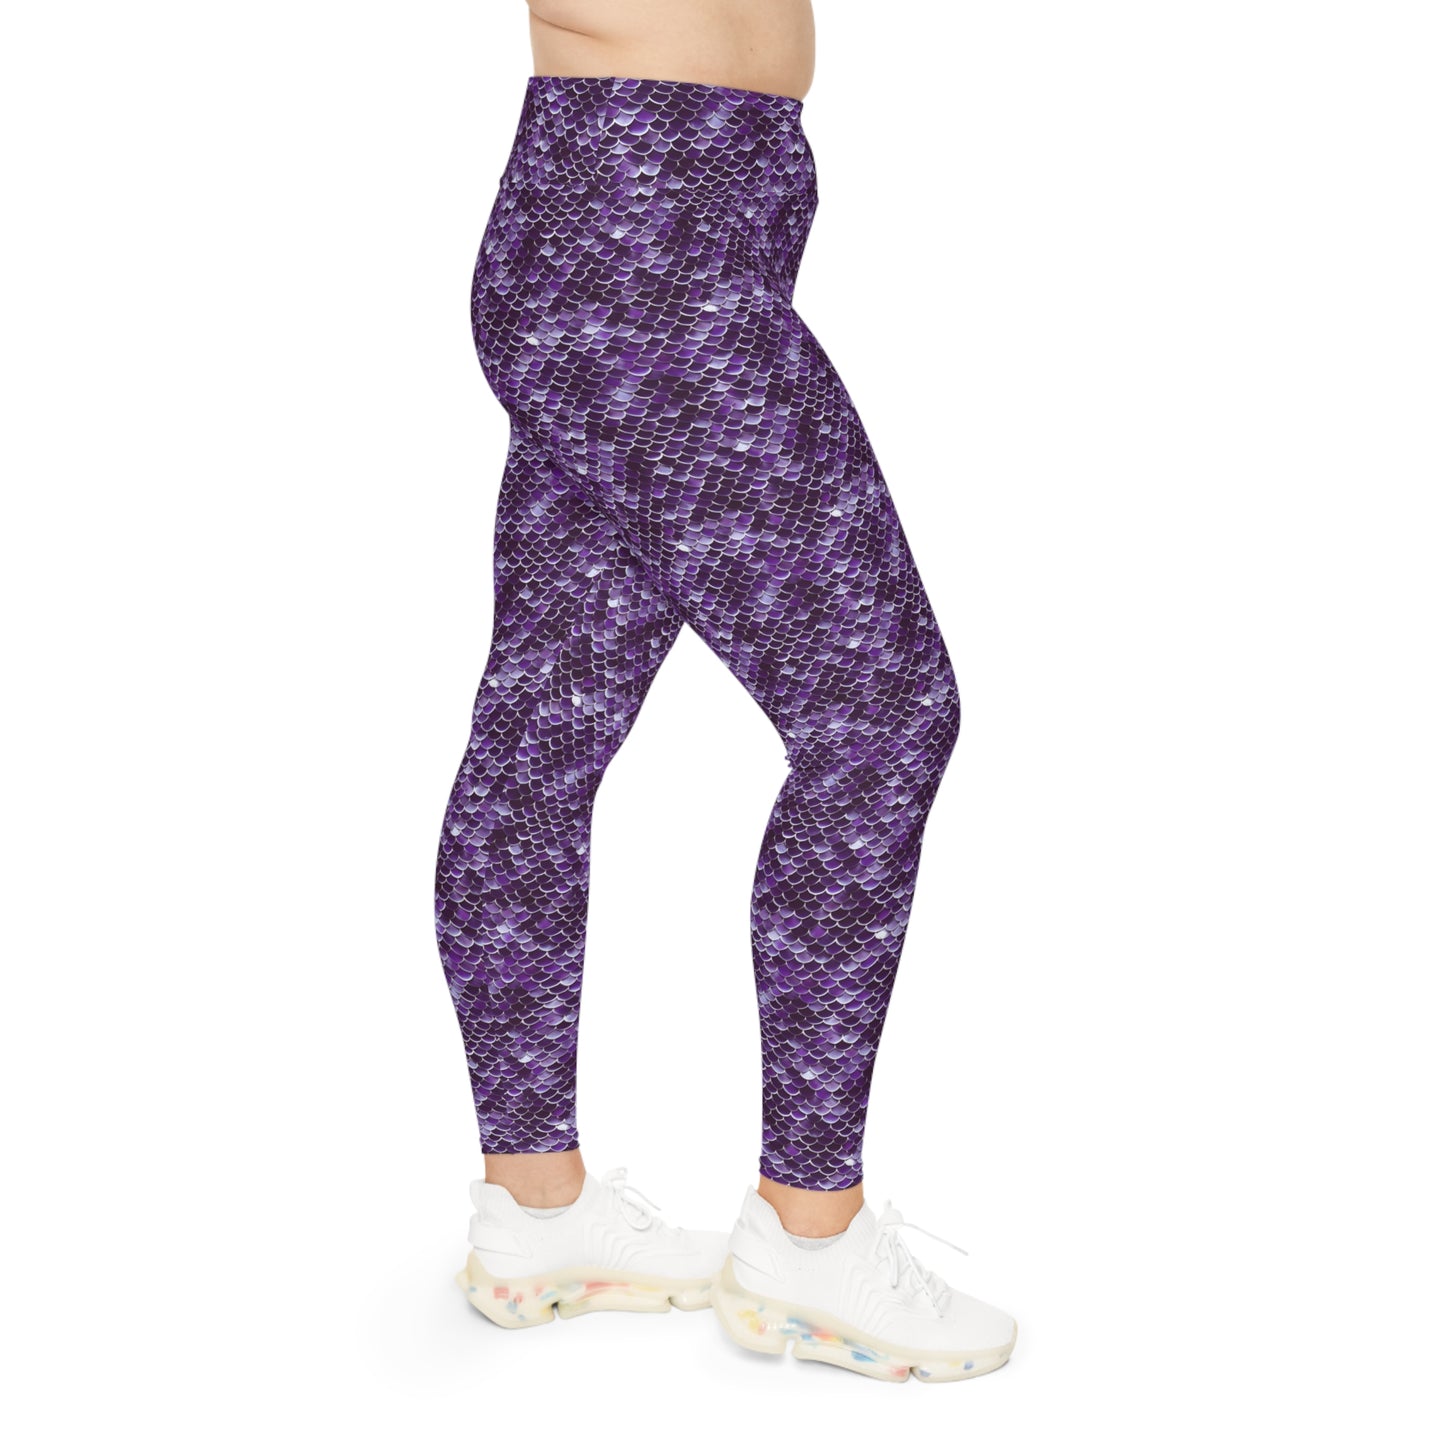 Plus Size Yoga Leggings Purple Mermaid Style Ocean Inspired Design 4-Way Stretch, High-Rise Waistband, UPF 50+, Gym, Workout, Athleticwear